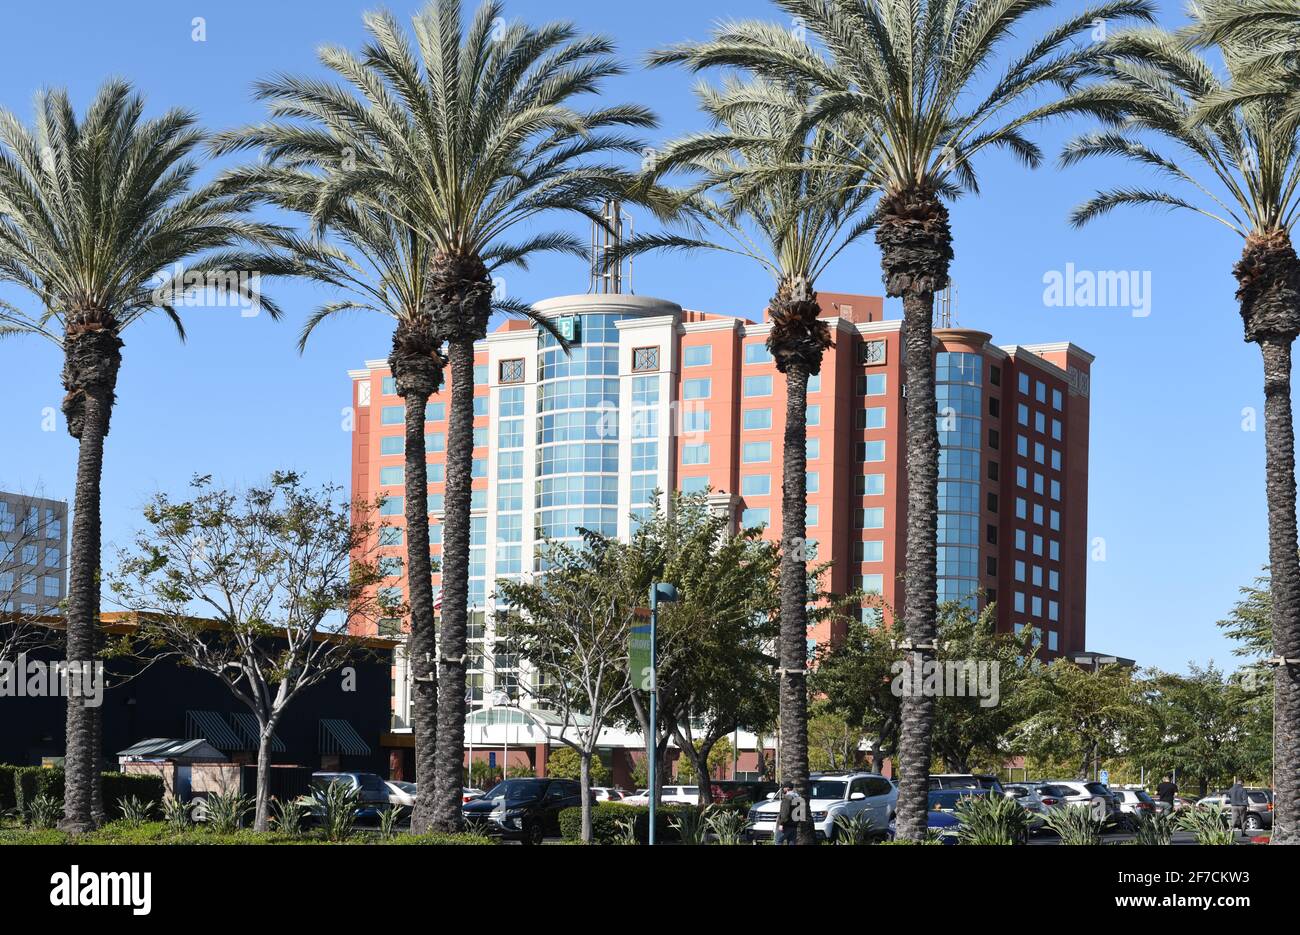 ANAHEIM, CALIFORNIA - 31 MAR 2021: Embassy Suites on Harbor Boulevard in the Anaheim Resort Area. Stock Photo